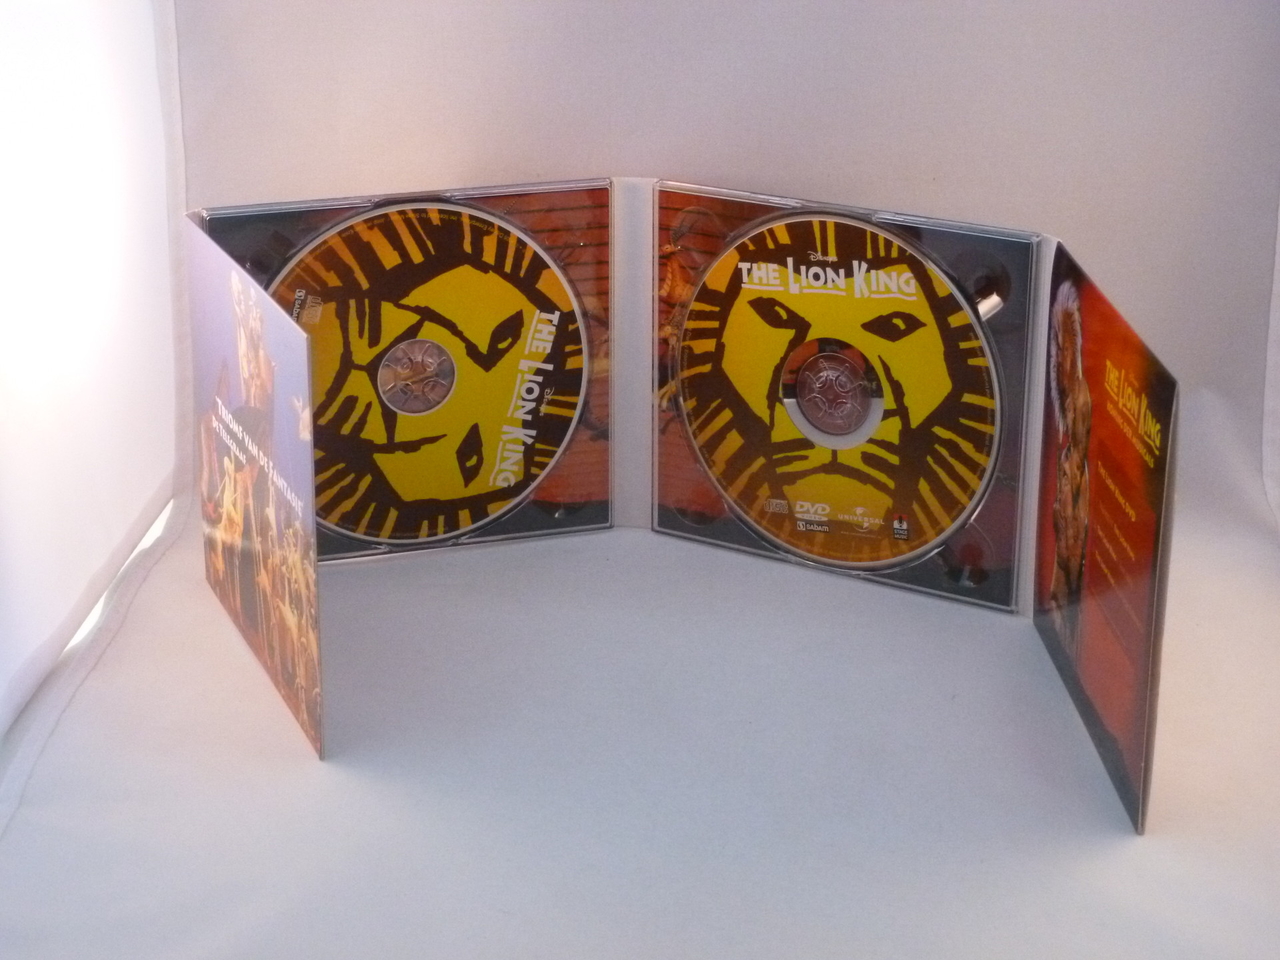 paddestoel calorie Sterkte The Lion King - Het Nederlandse Cast Album (CD + DVD) - Tweedehands CD